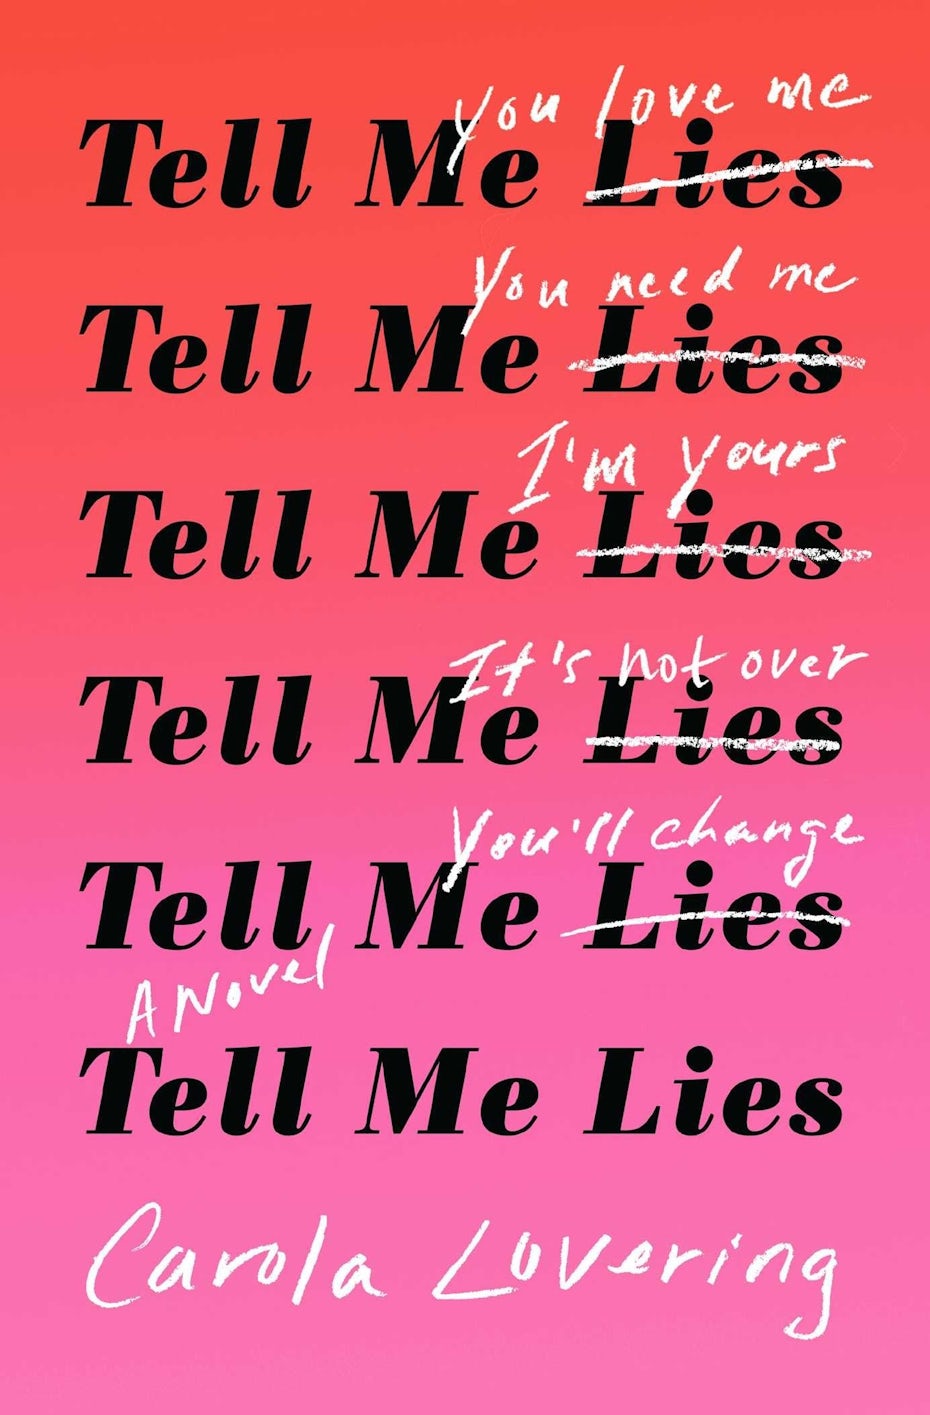 Tell me lies book cover